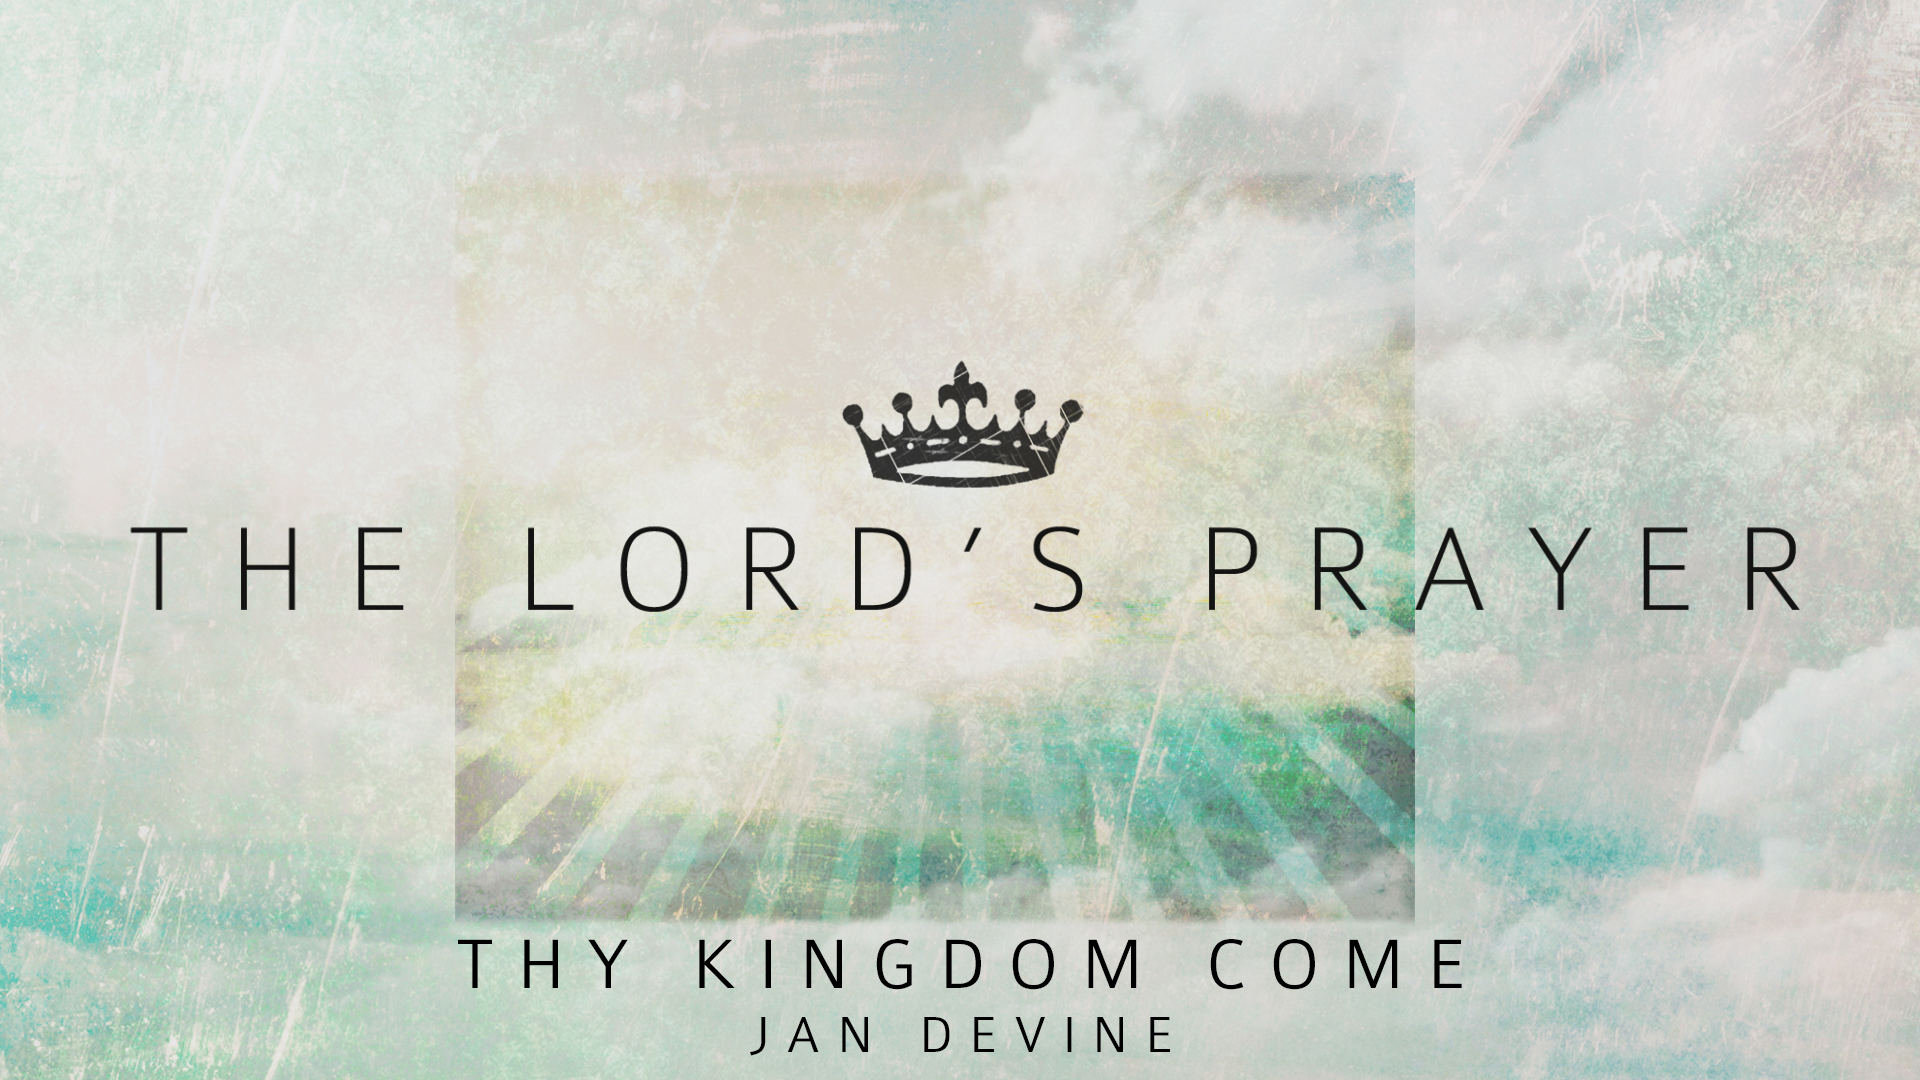 Thy Kingdom Come Image